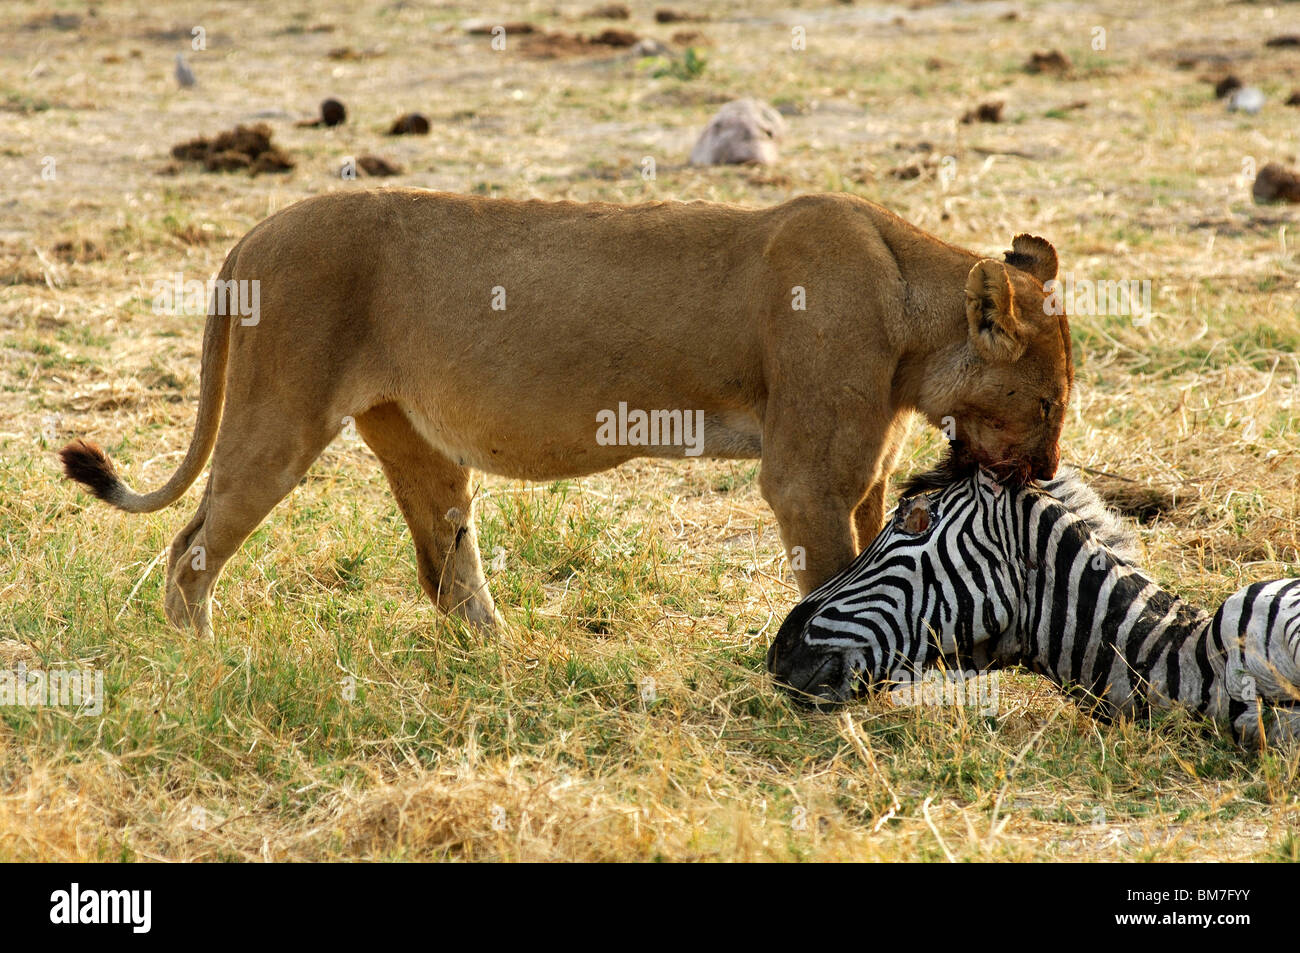 Lion devorando una cebra Fotografía de stock - Alamy